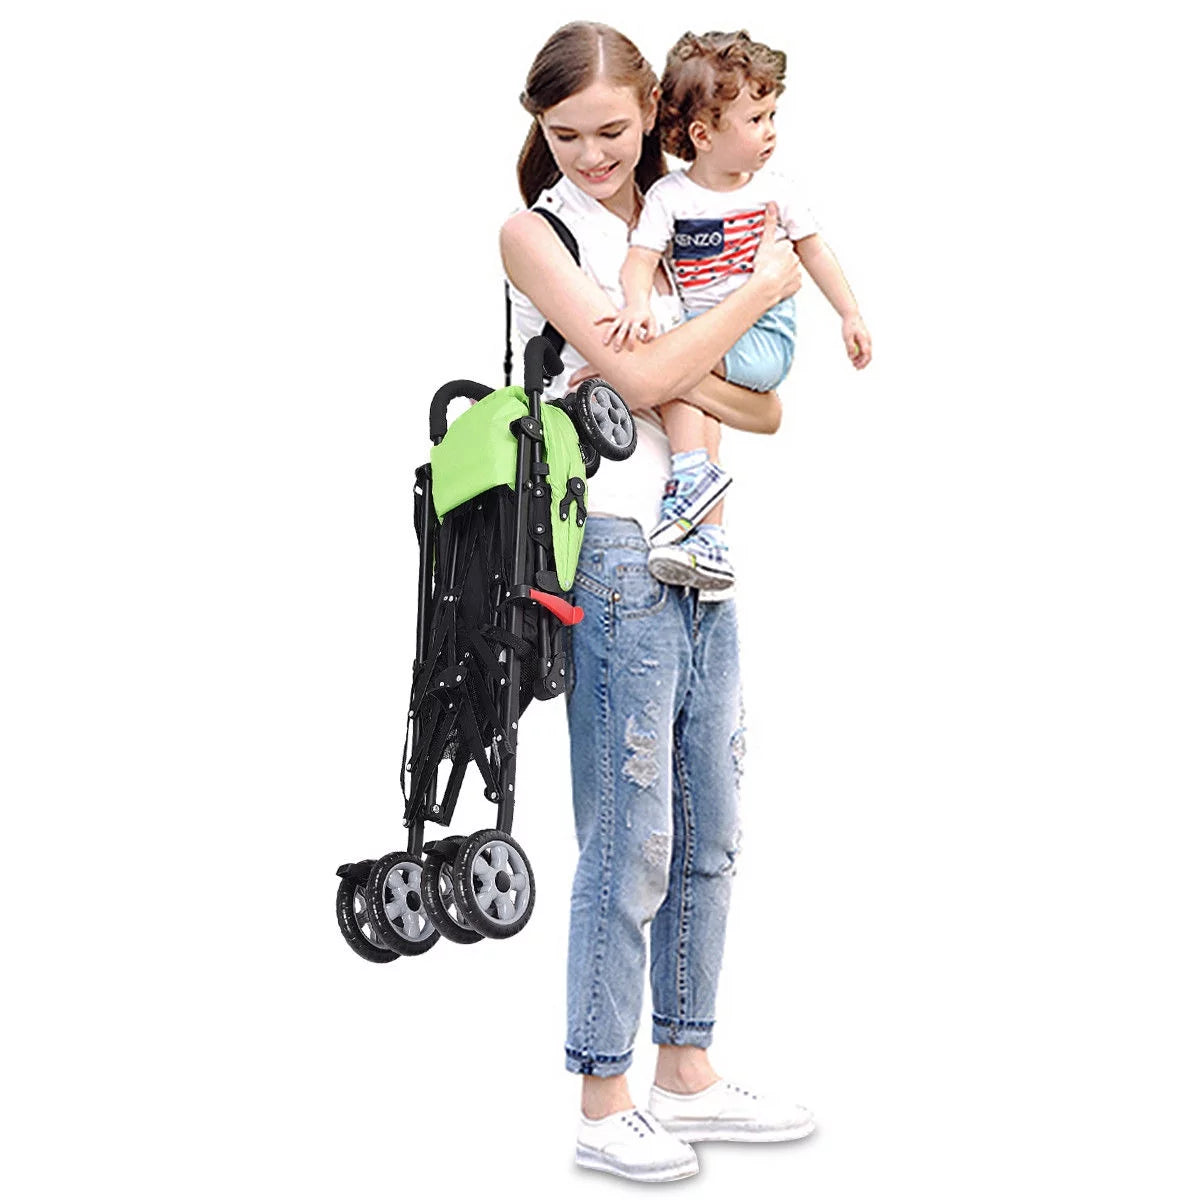 Folding Lightweight Baby Toddler Umbrella Travel Stroller with Storage Basket Green